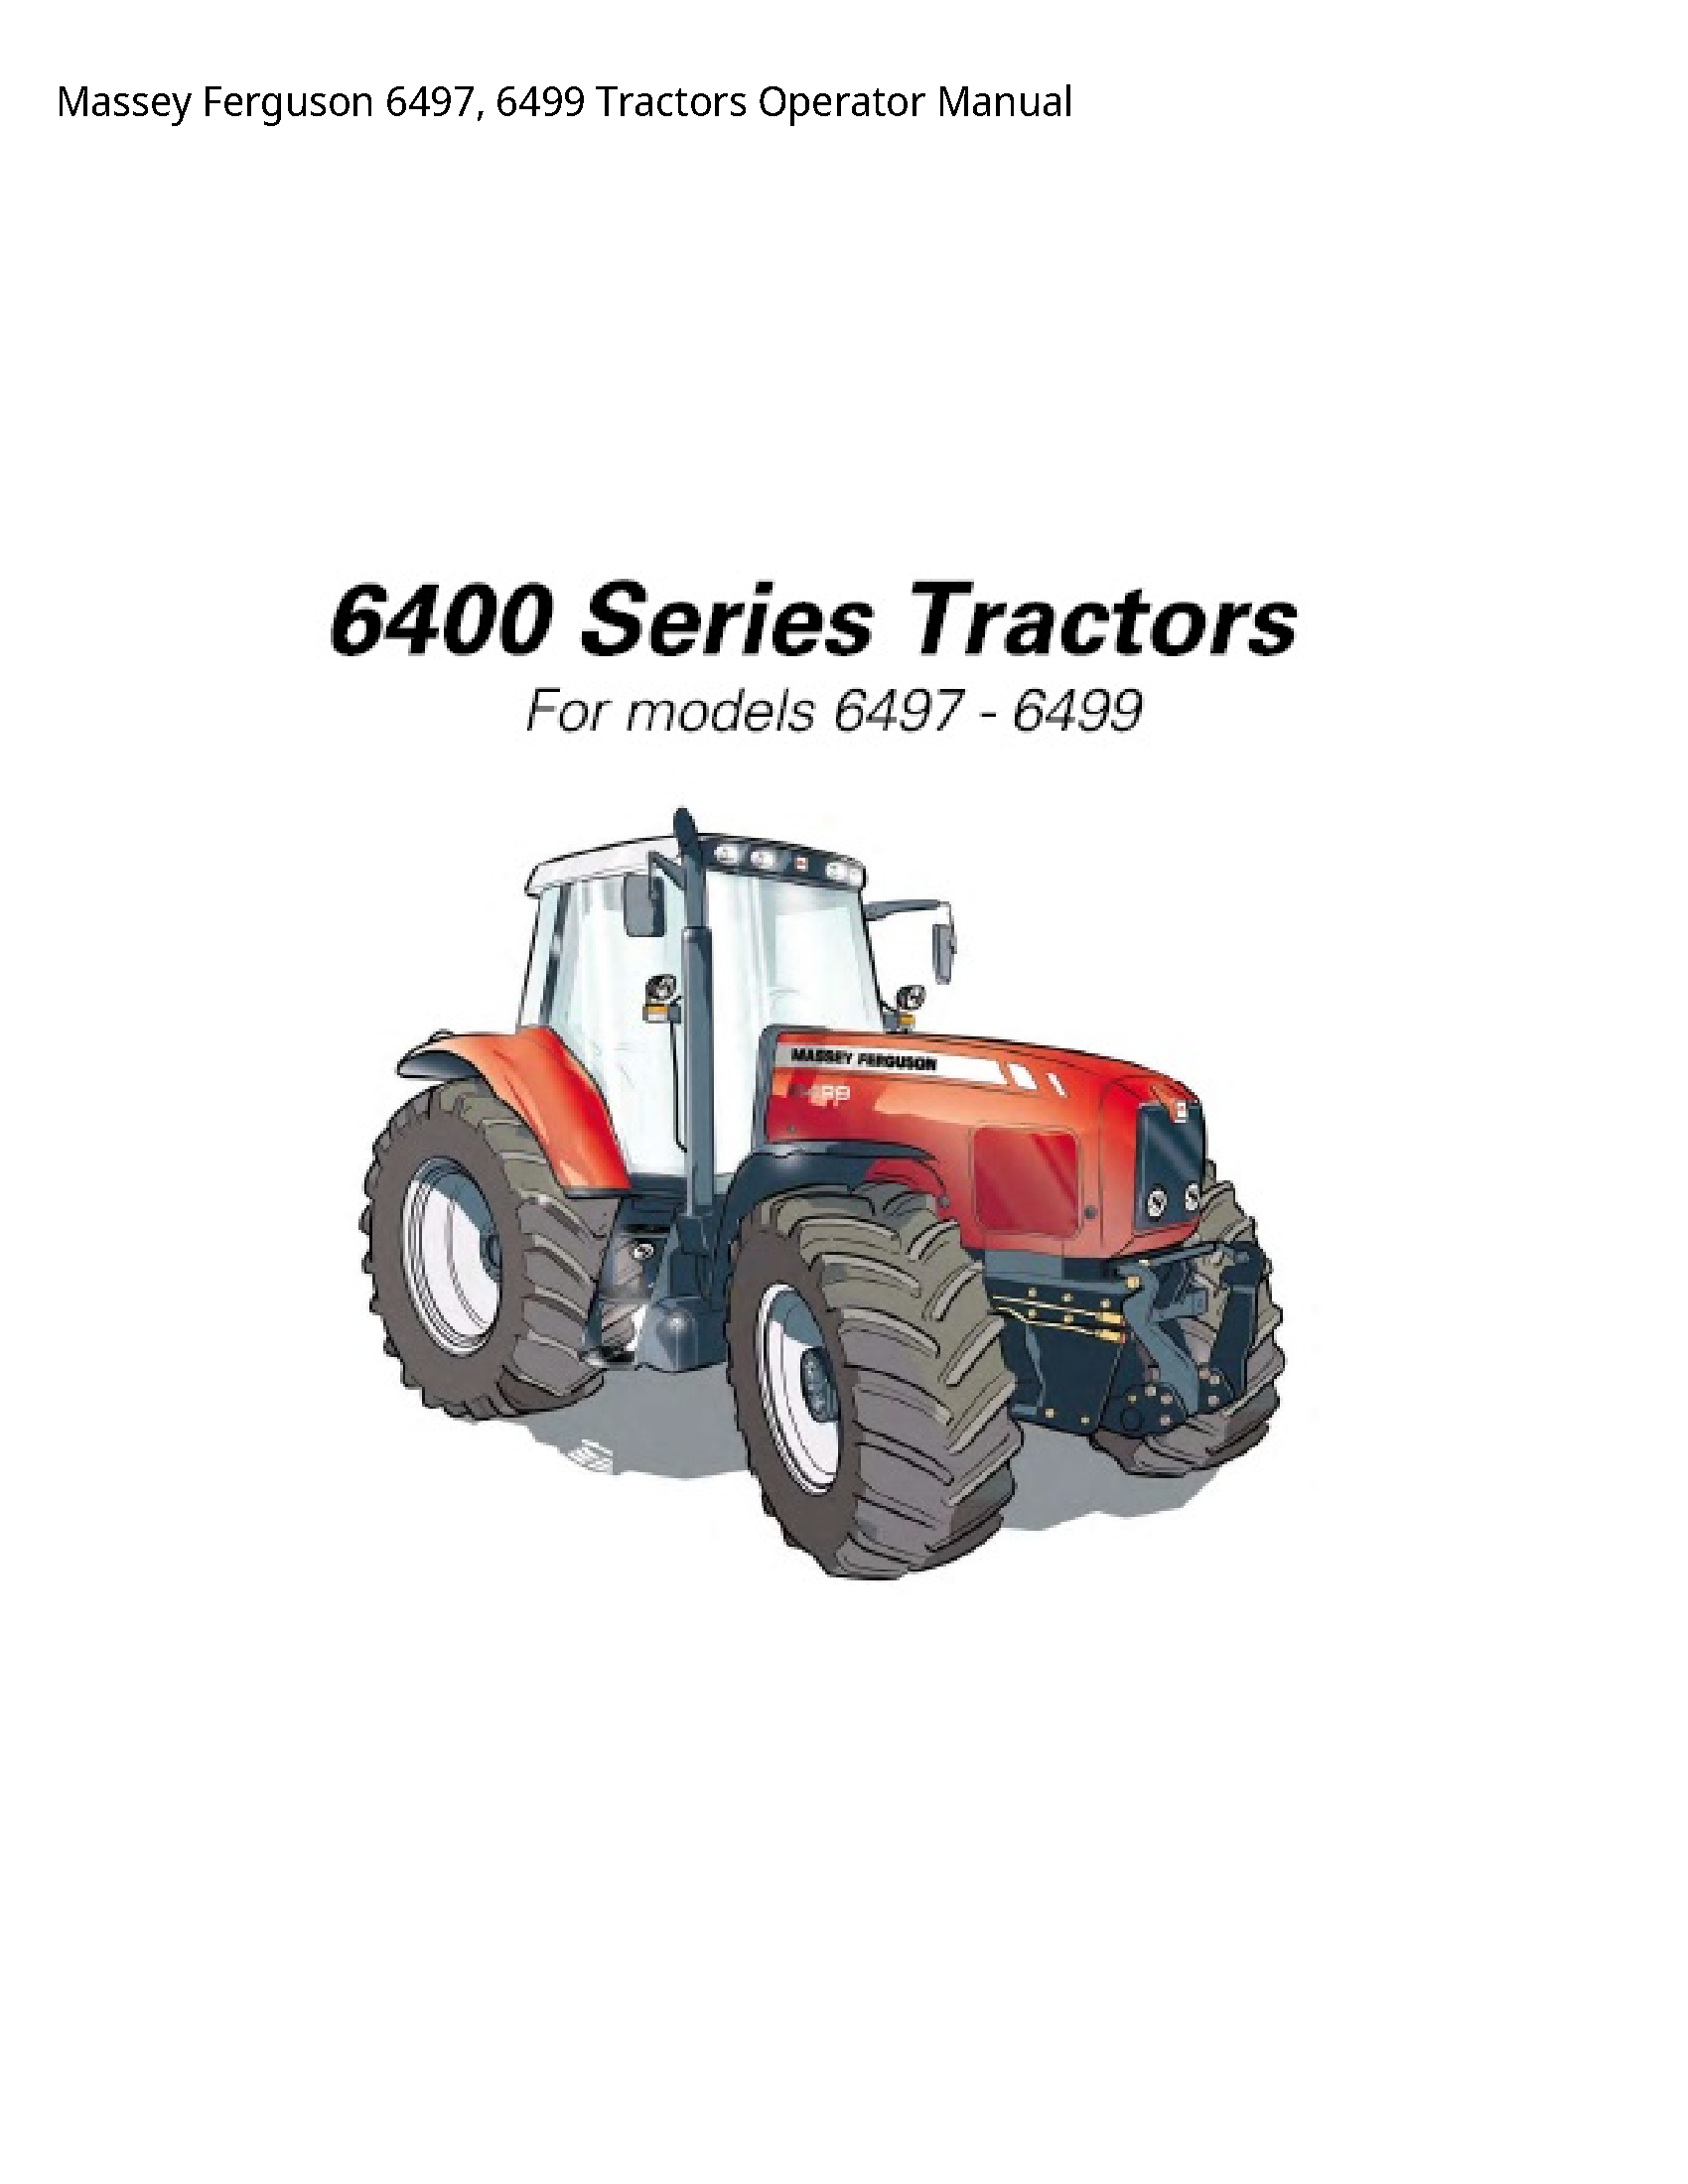 Massey Ferguson 6497 Tractors Operator manual